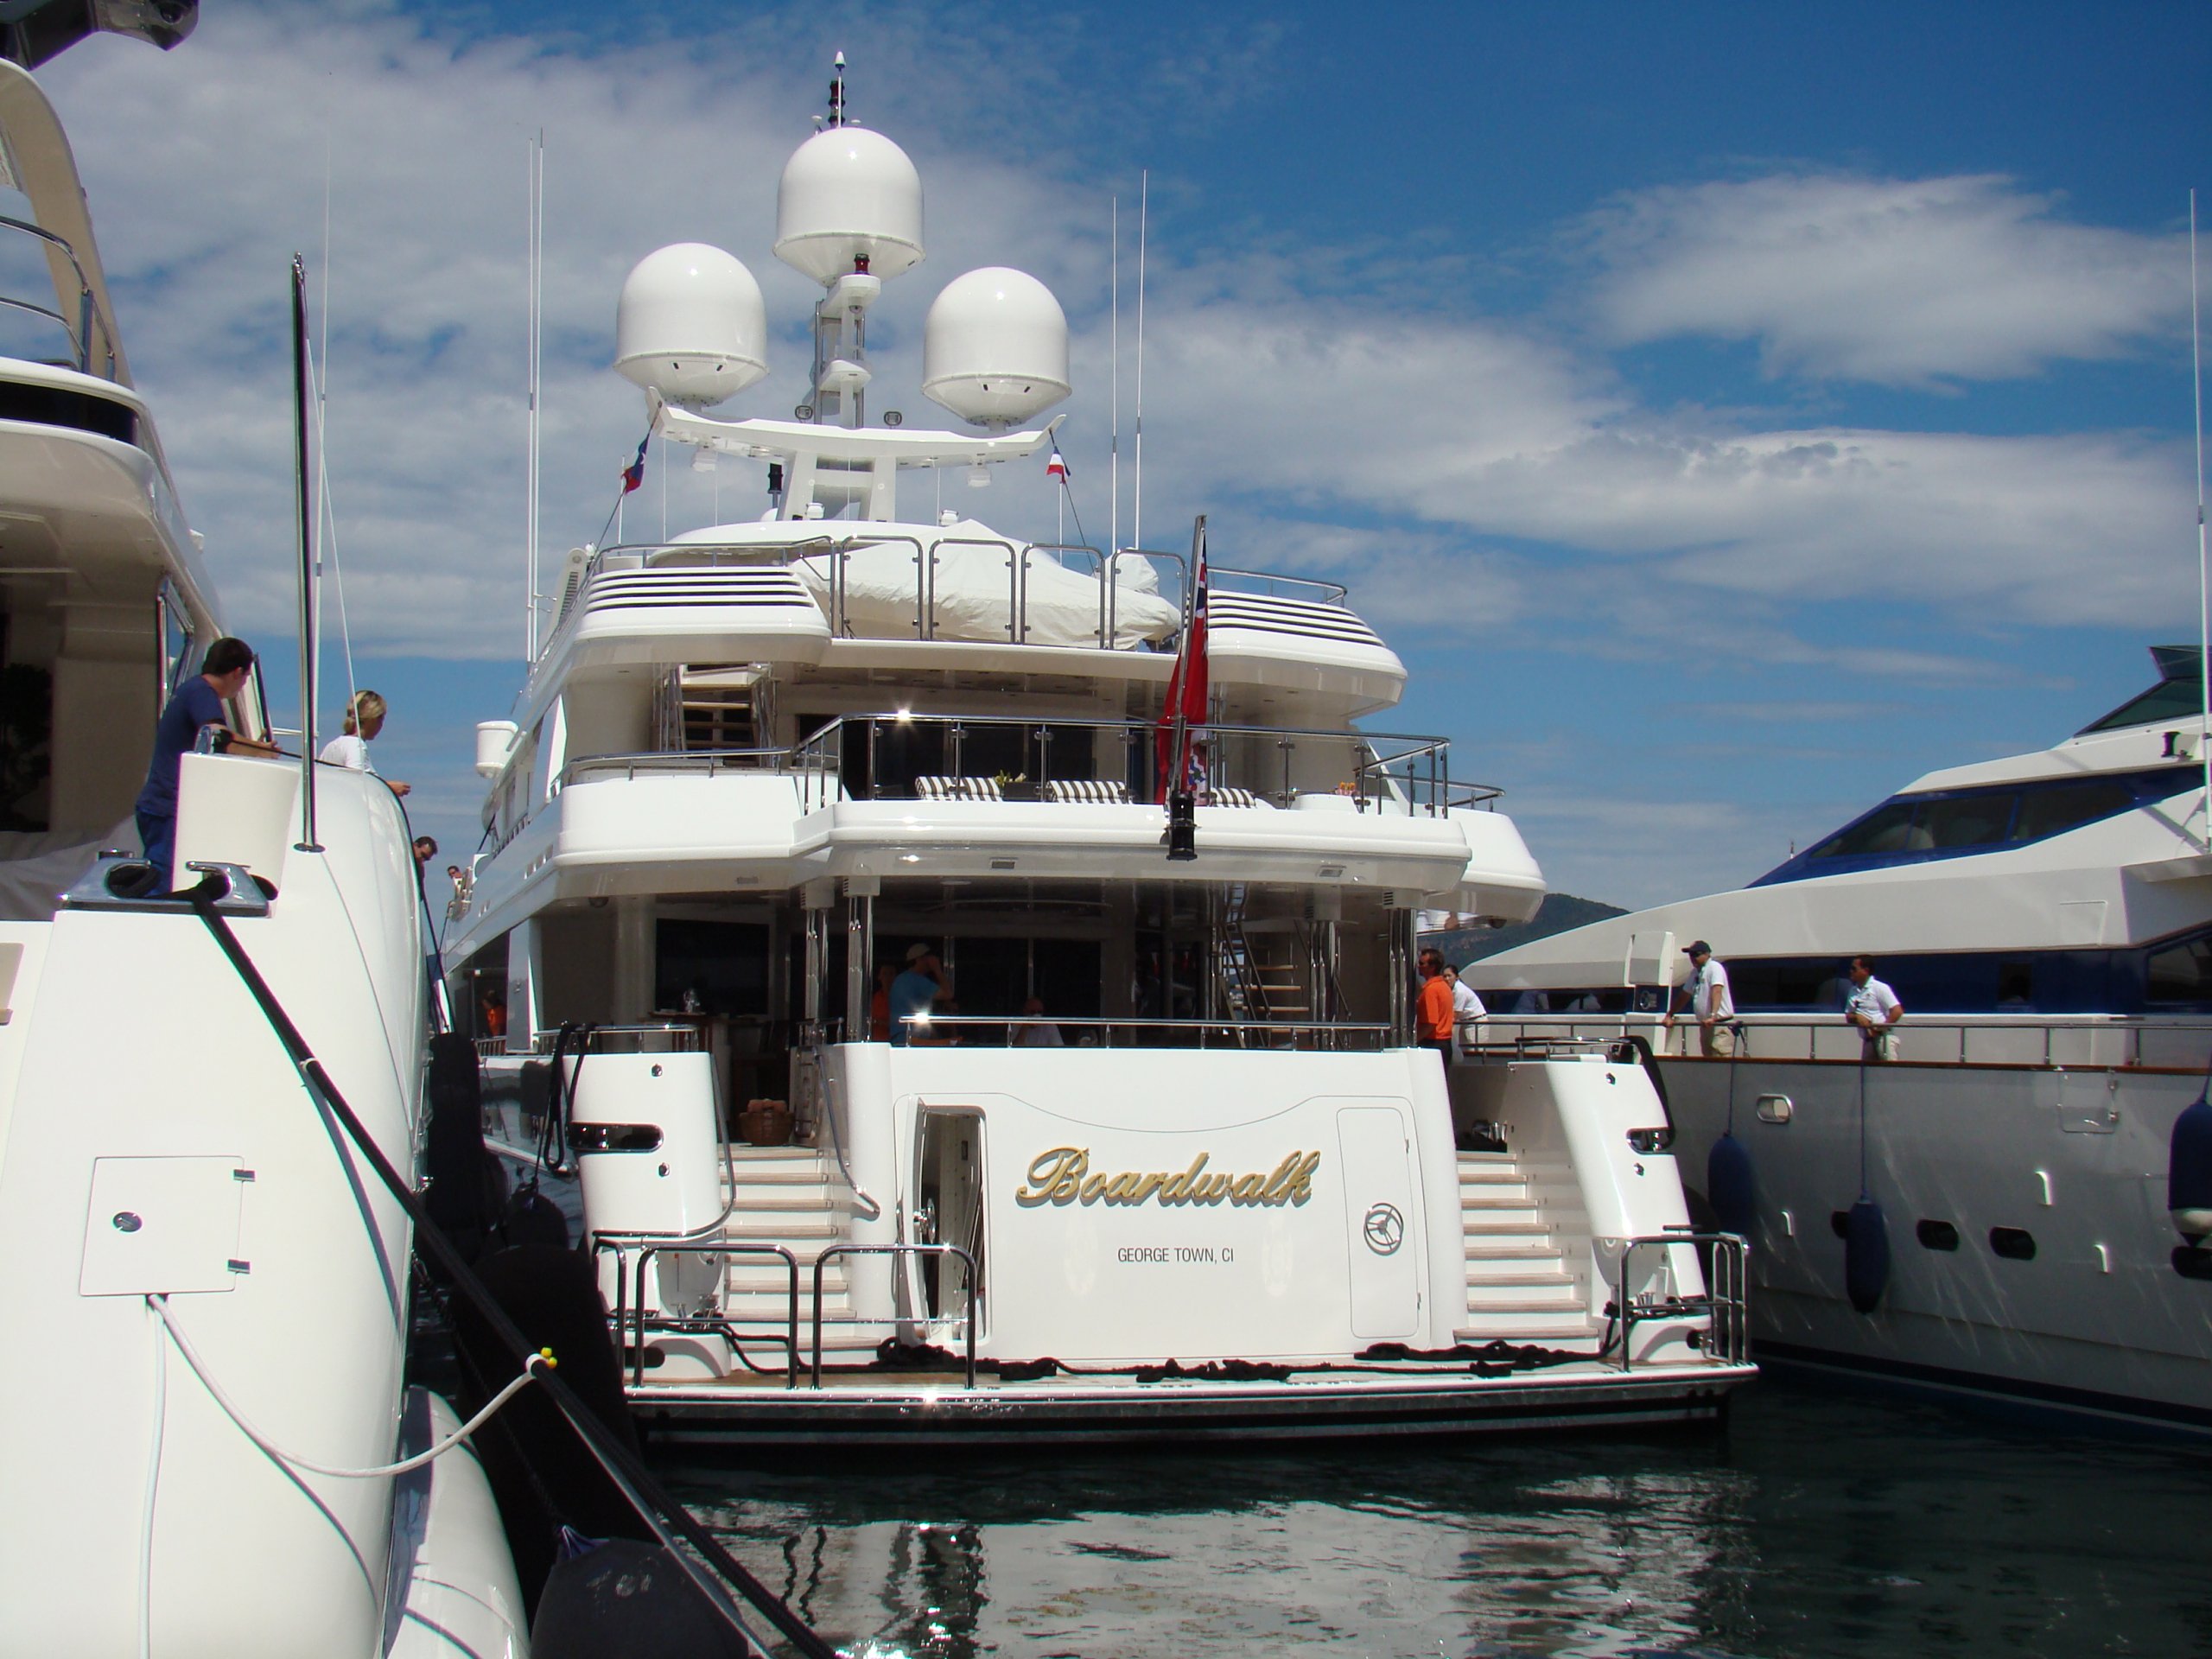 BOARDWALK Yacht • Westport • 2010 • Proprietario Tilman Fertitta